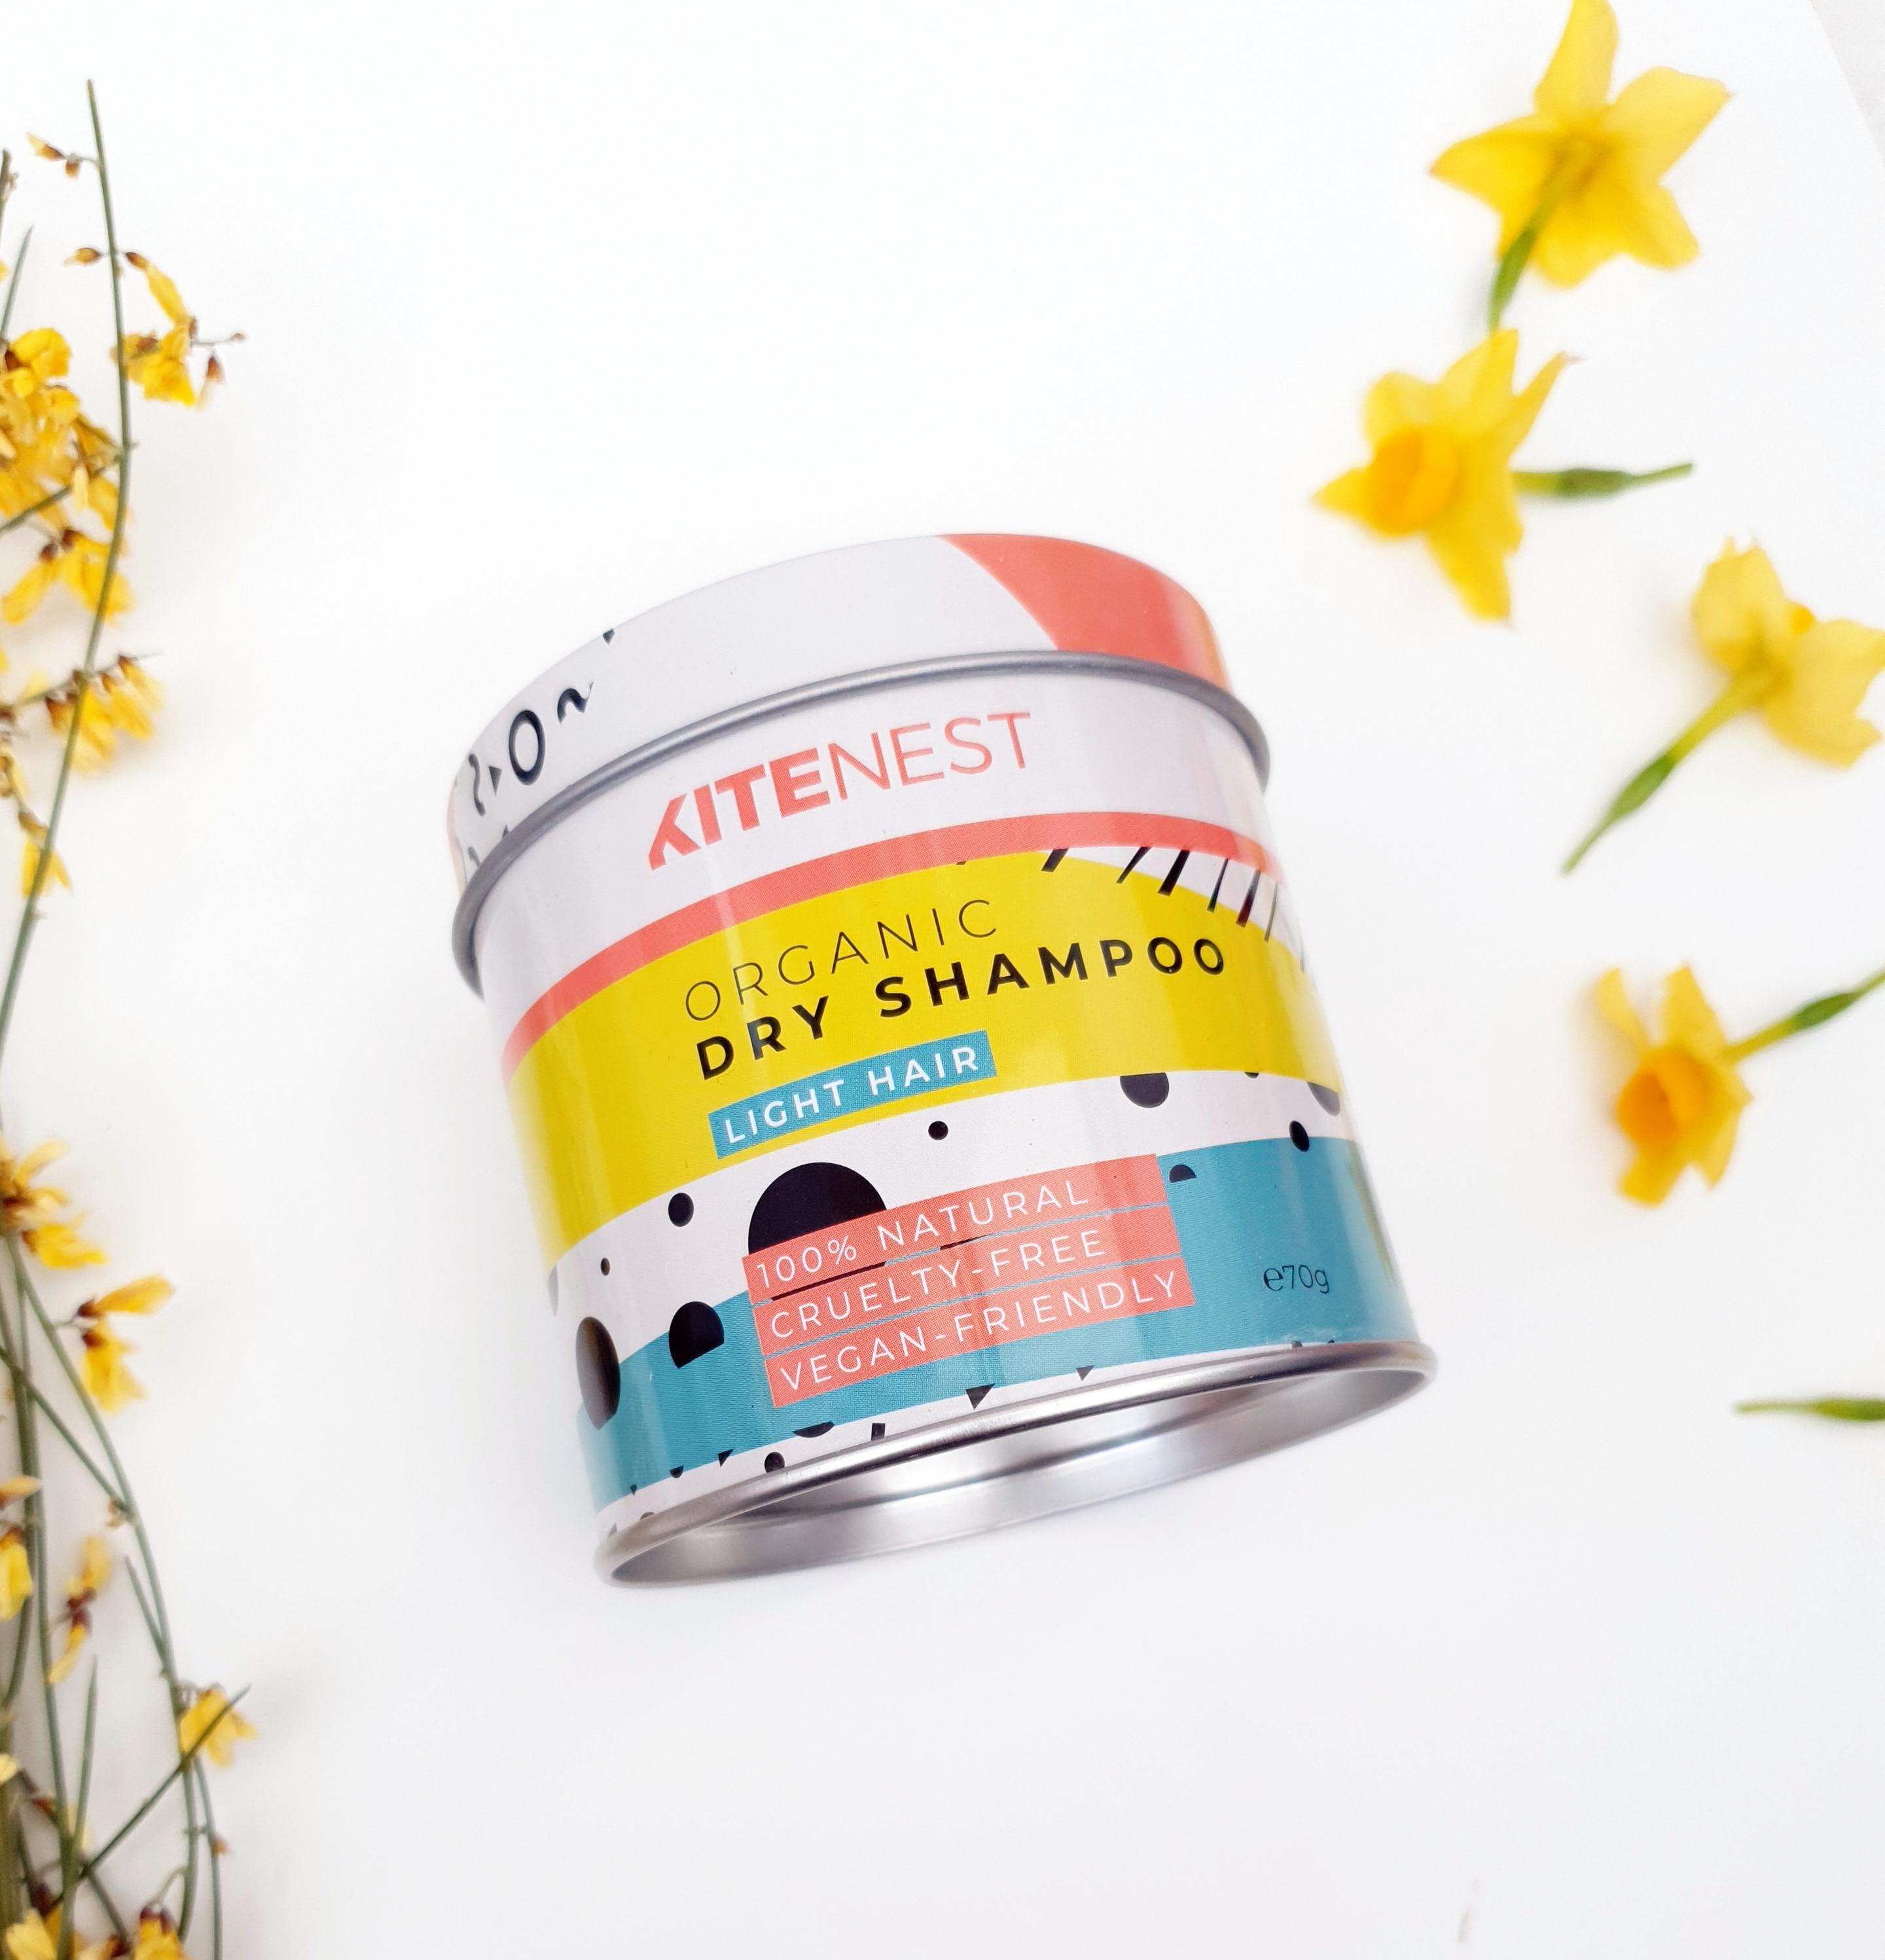 Kitenest - Organic Dry Shampoo - 200ml Refillable Tin